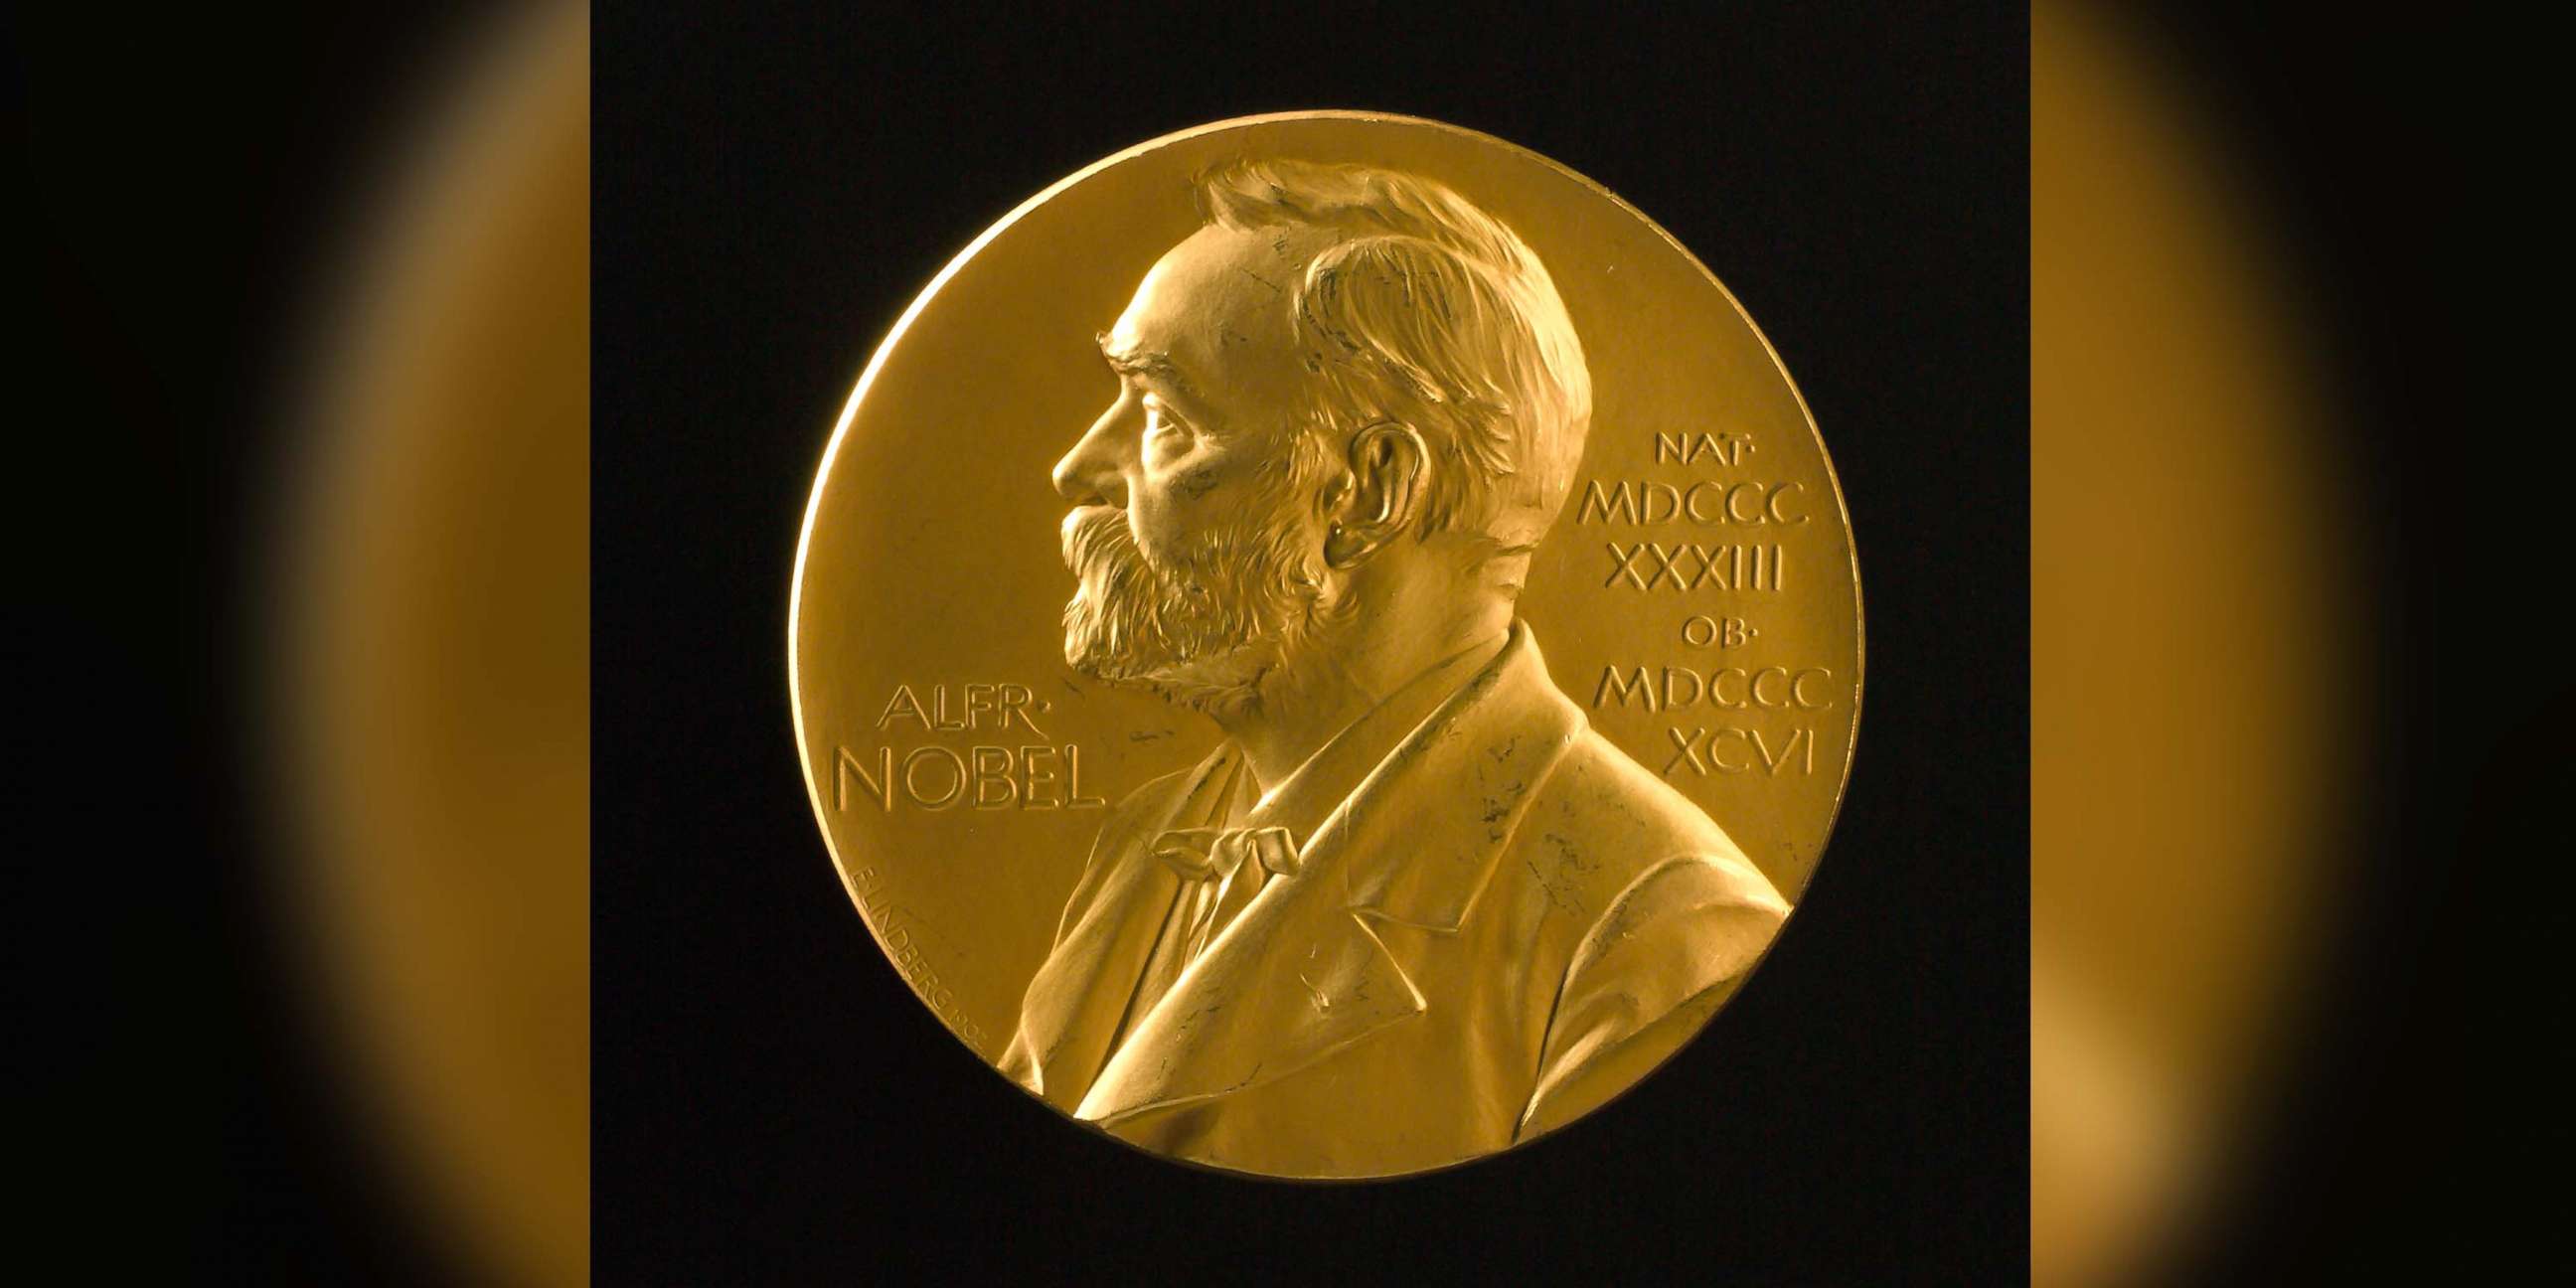 PHOTO: Johannes V. Jensens Nobel Prize winner medal from 1944 is seen here in this file photo, Nov. 11, 2003.